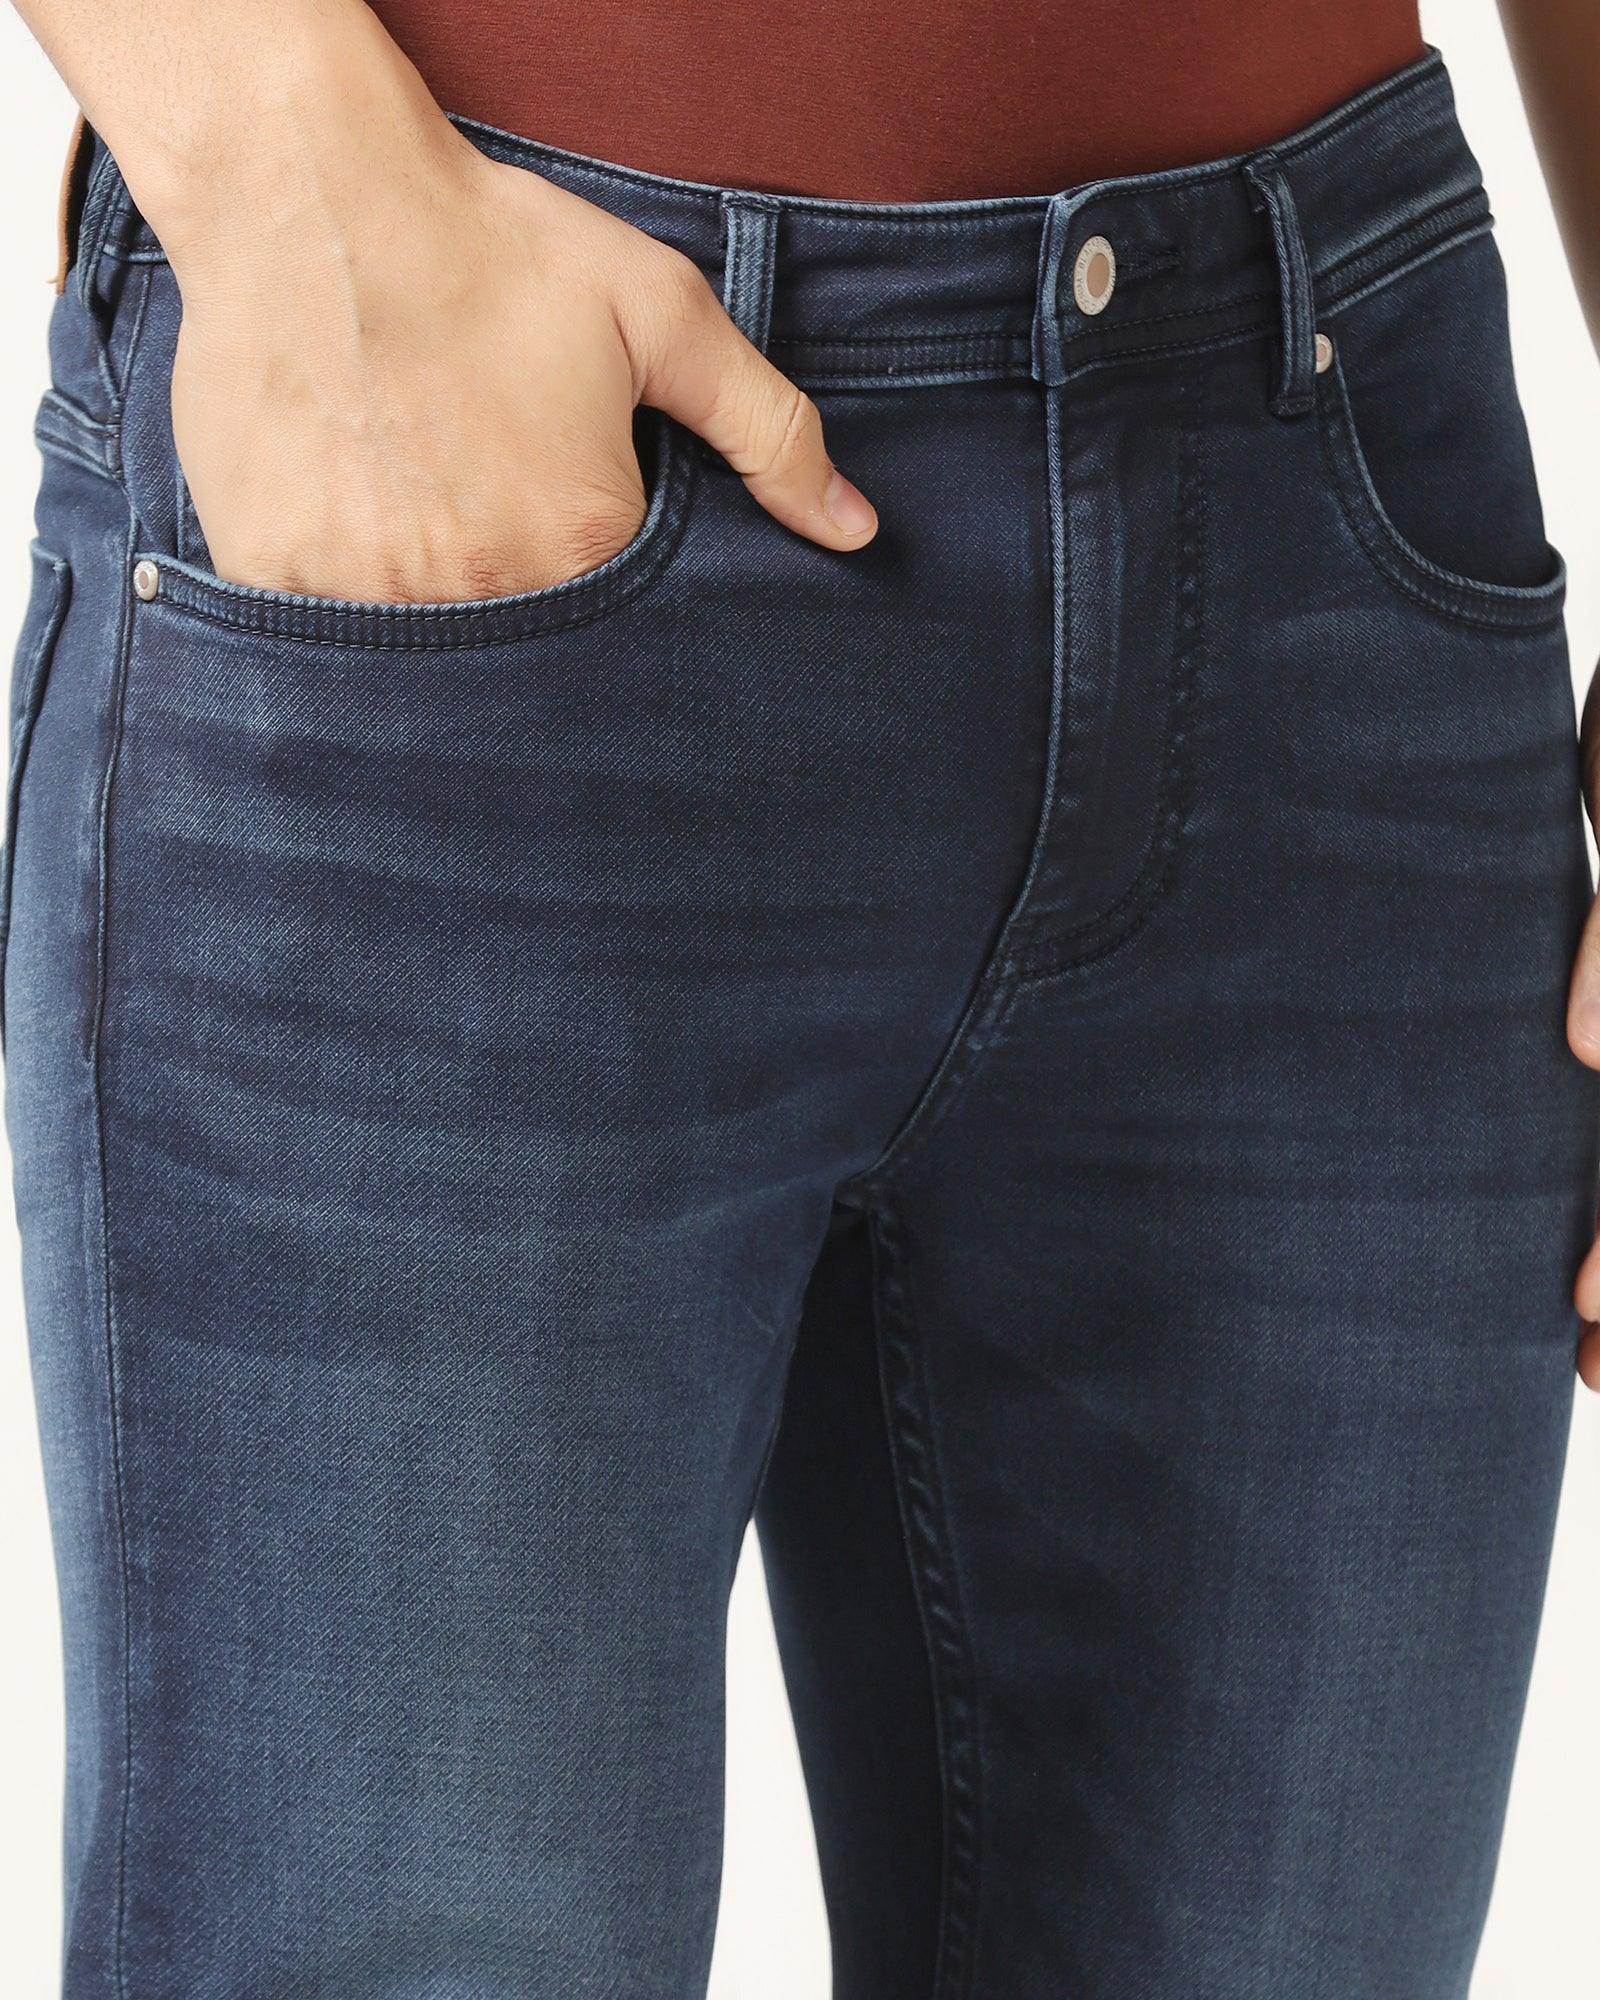 Slim Yonk Fit Indigo Blue Textured Jeans - Alek